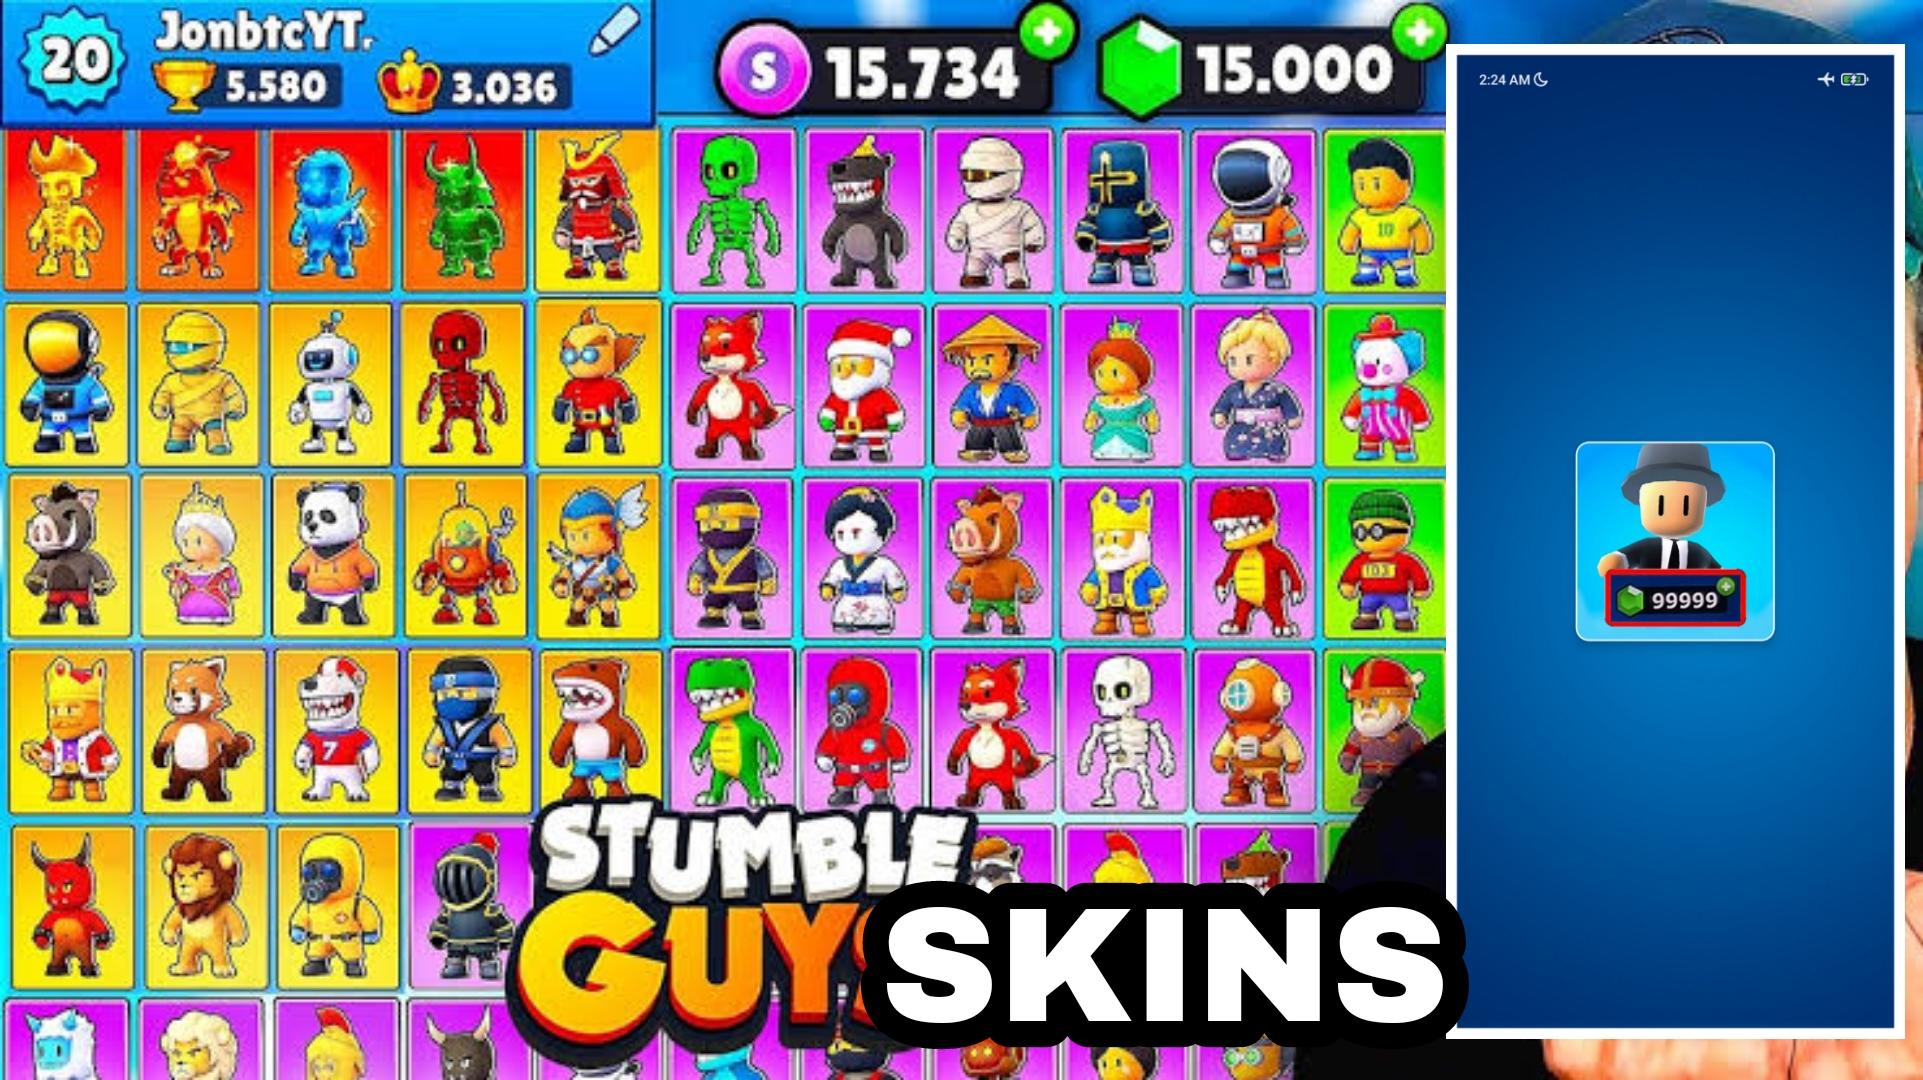 skin stumble guys mod – Apps on Google Play